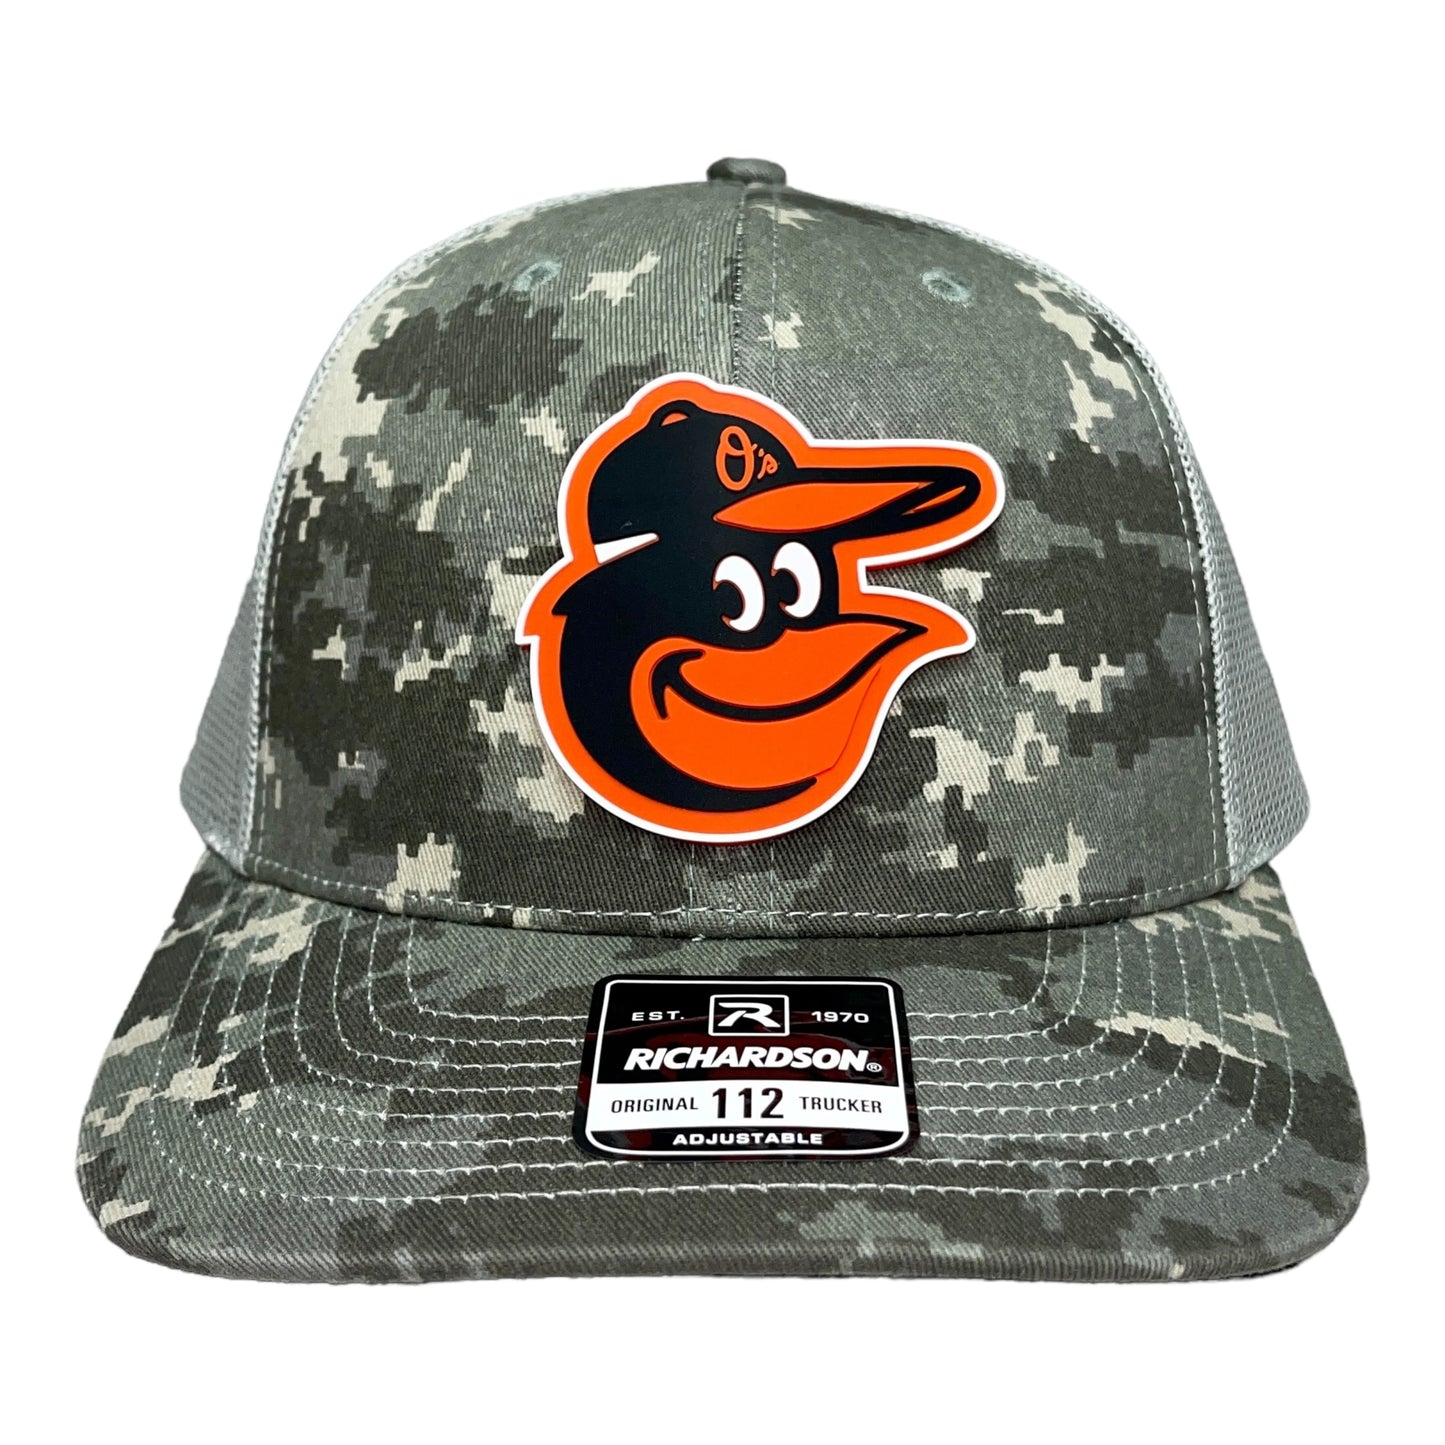 Baltimore Orioles 3D Snapback Trucker Hat- Military Digital Camo